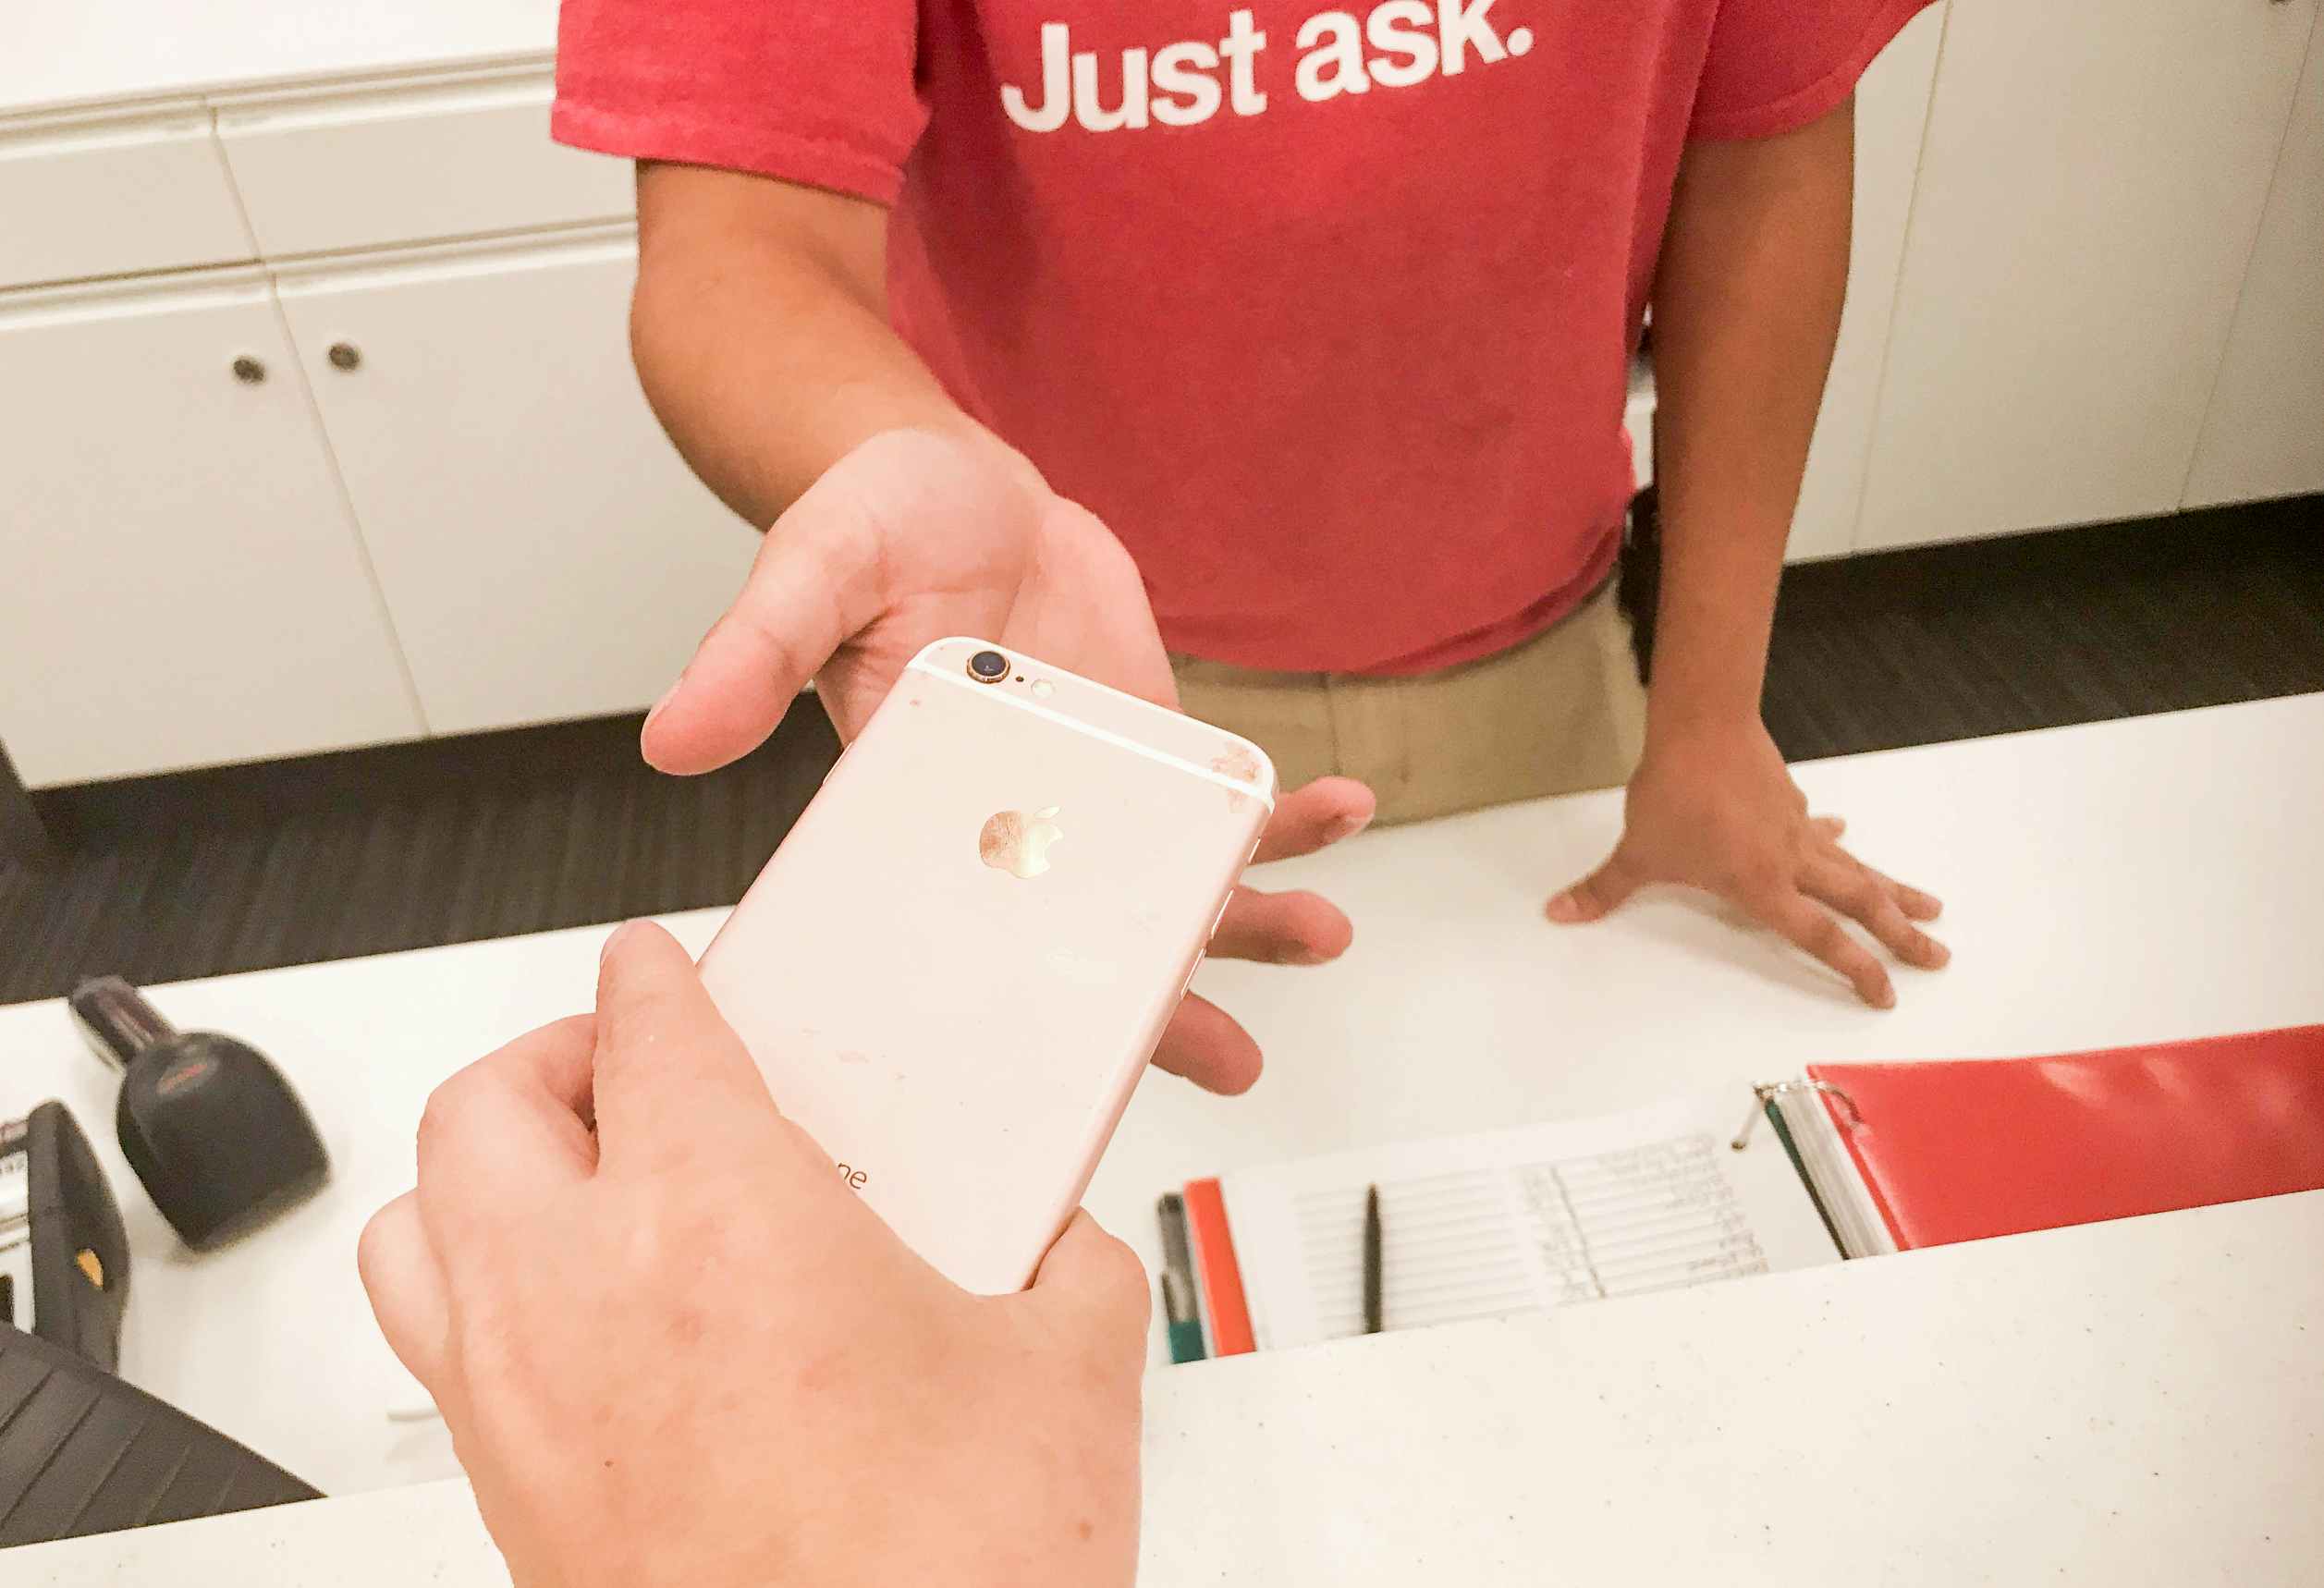 A woman handing an old iphone to a target sales associate